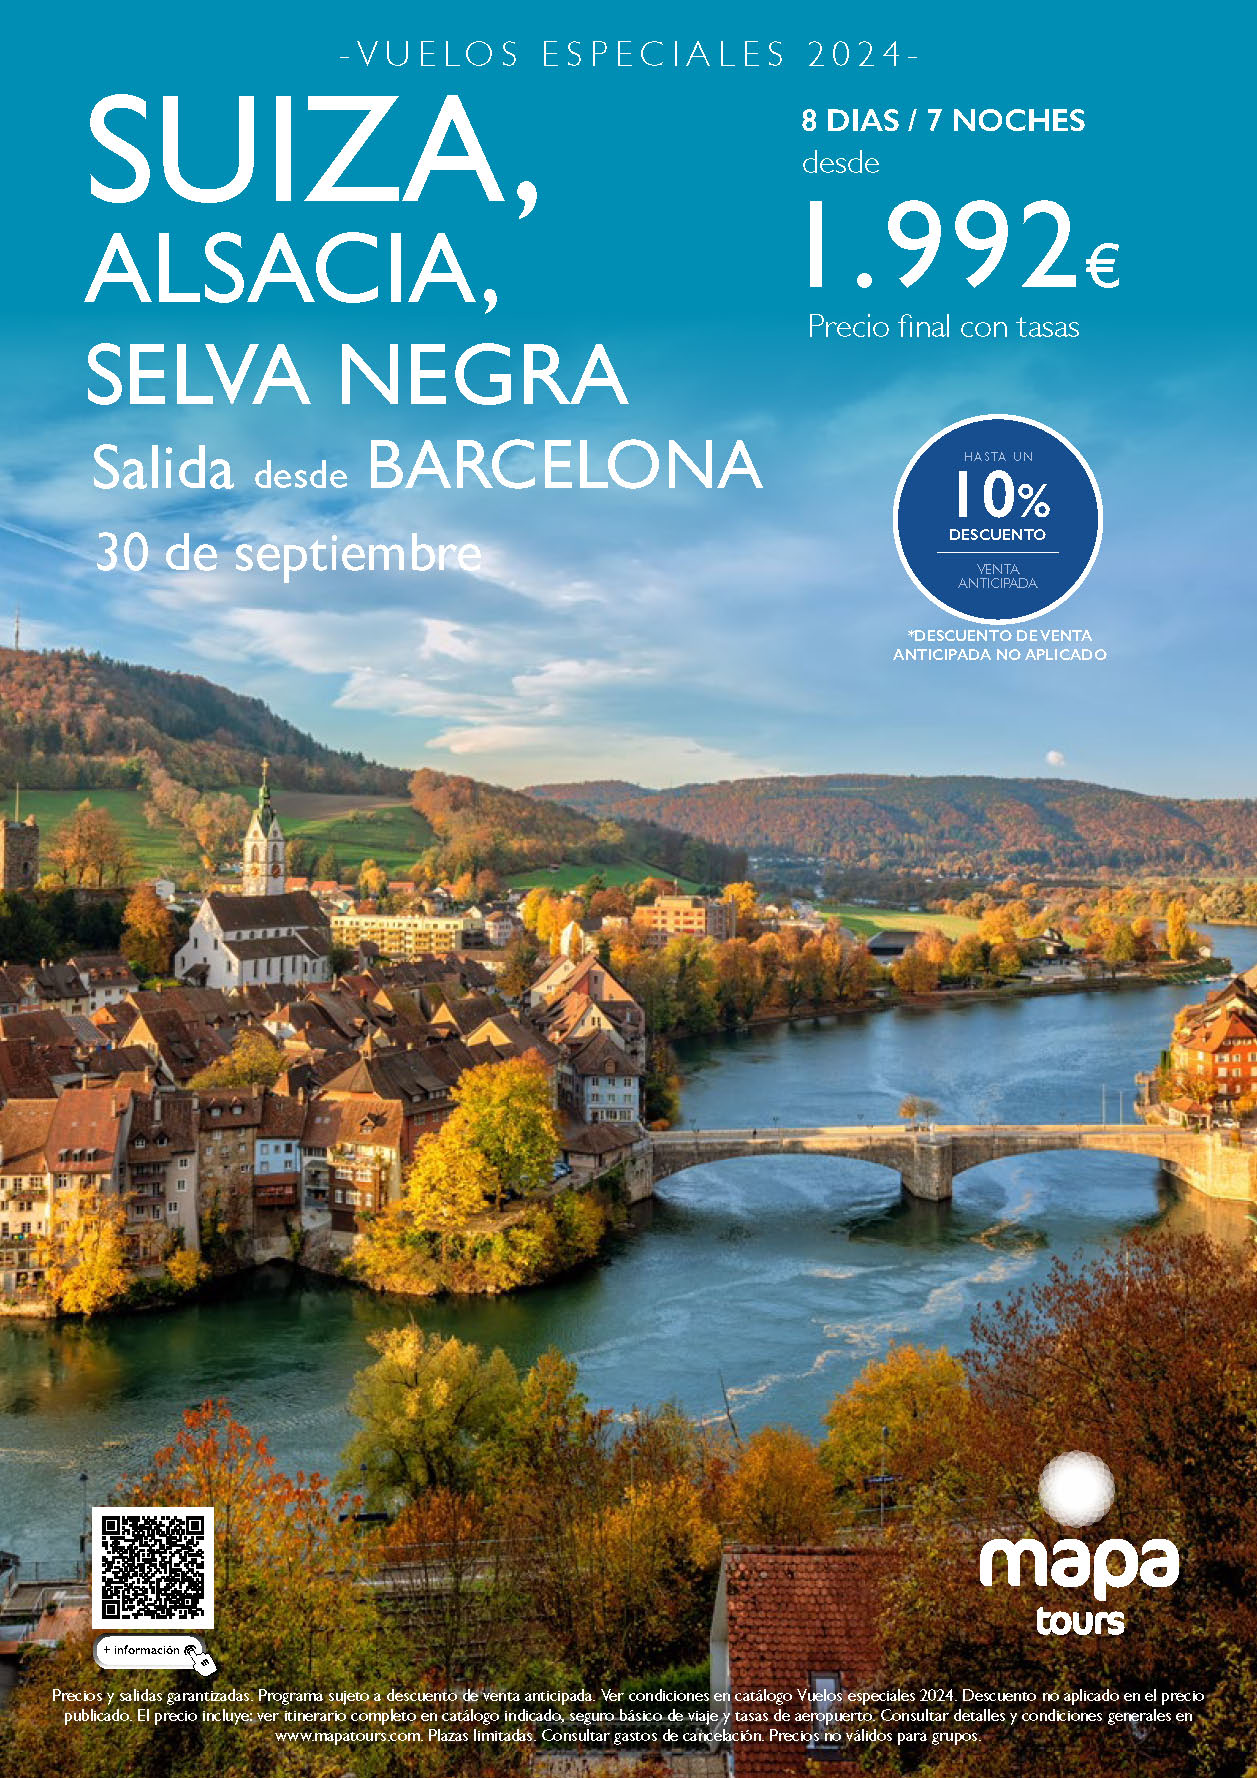 Oferta Mapa Tours circuito Suiza Selva Negra y Alsacia 8 dias salida 30 Septiembre 2024 vuelo especial directo desde Barcelona